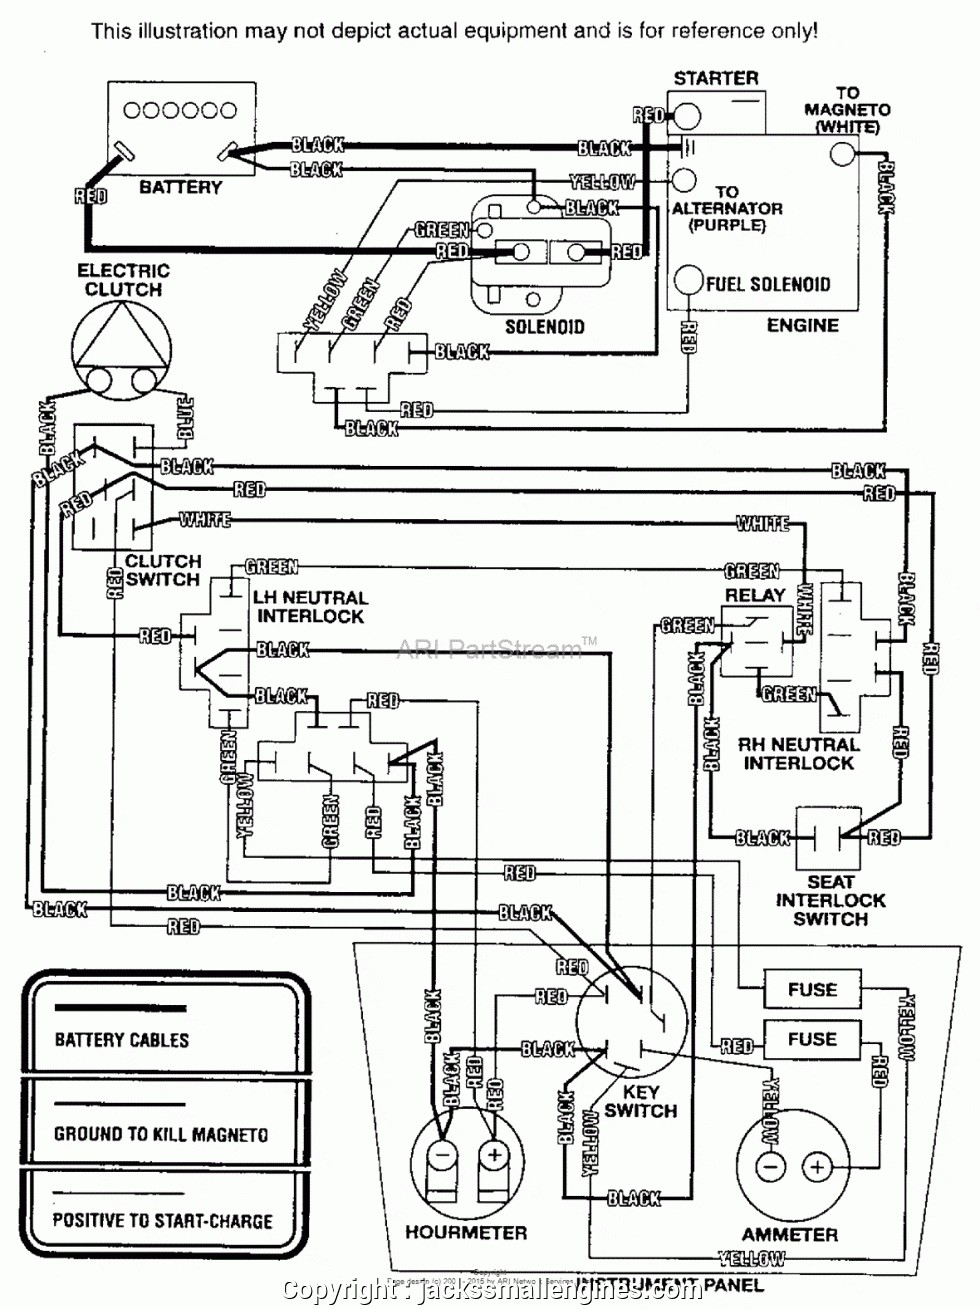 briggs and stratton stator wiring diagram explained wiring diagrams rh dmdelectro co Briggs and Stratton Ignition